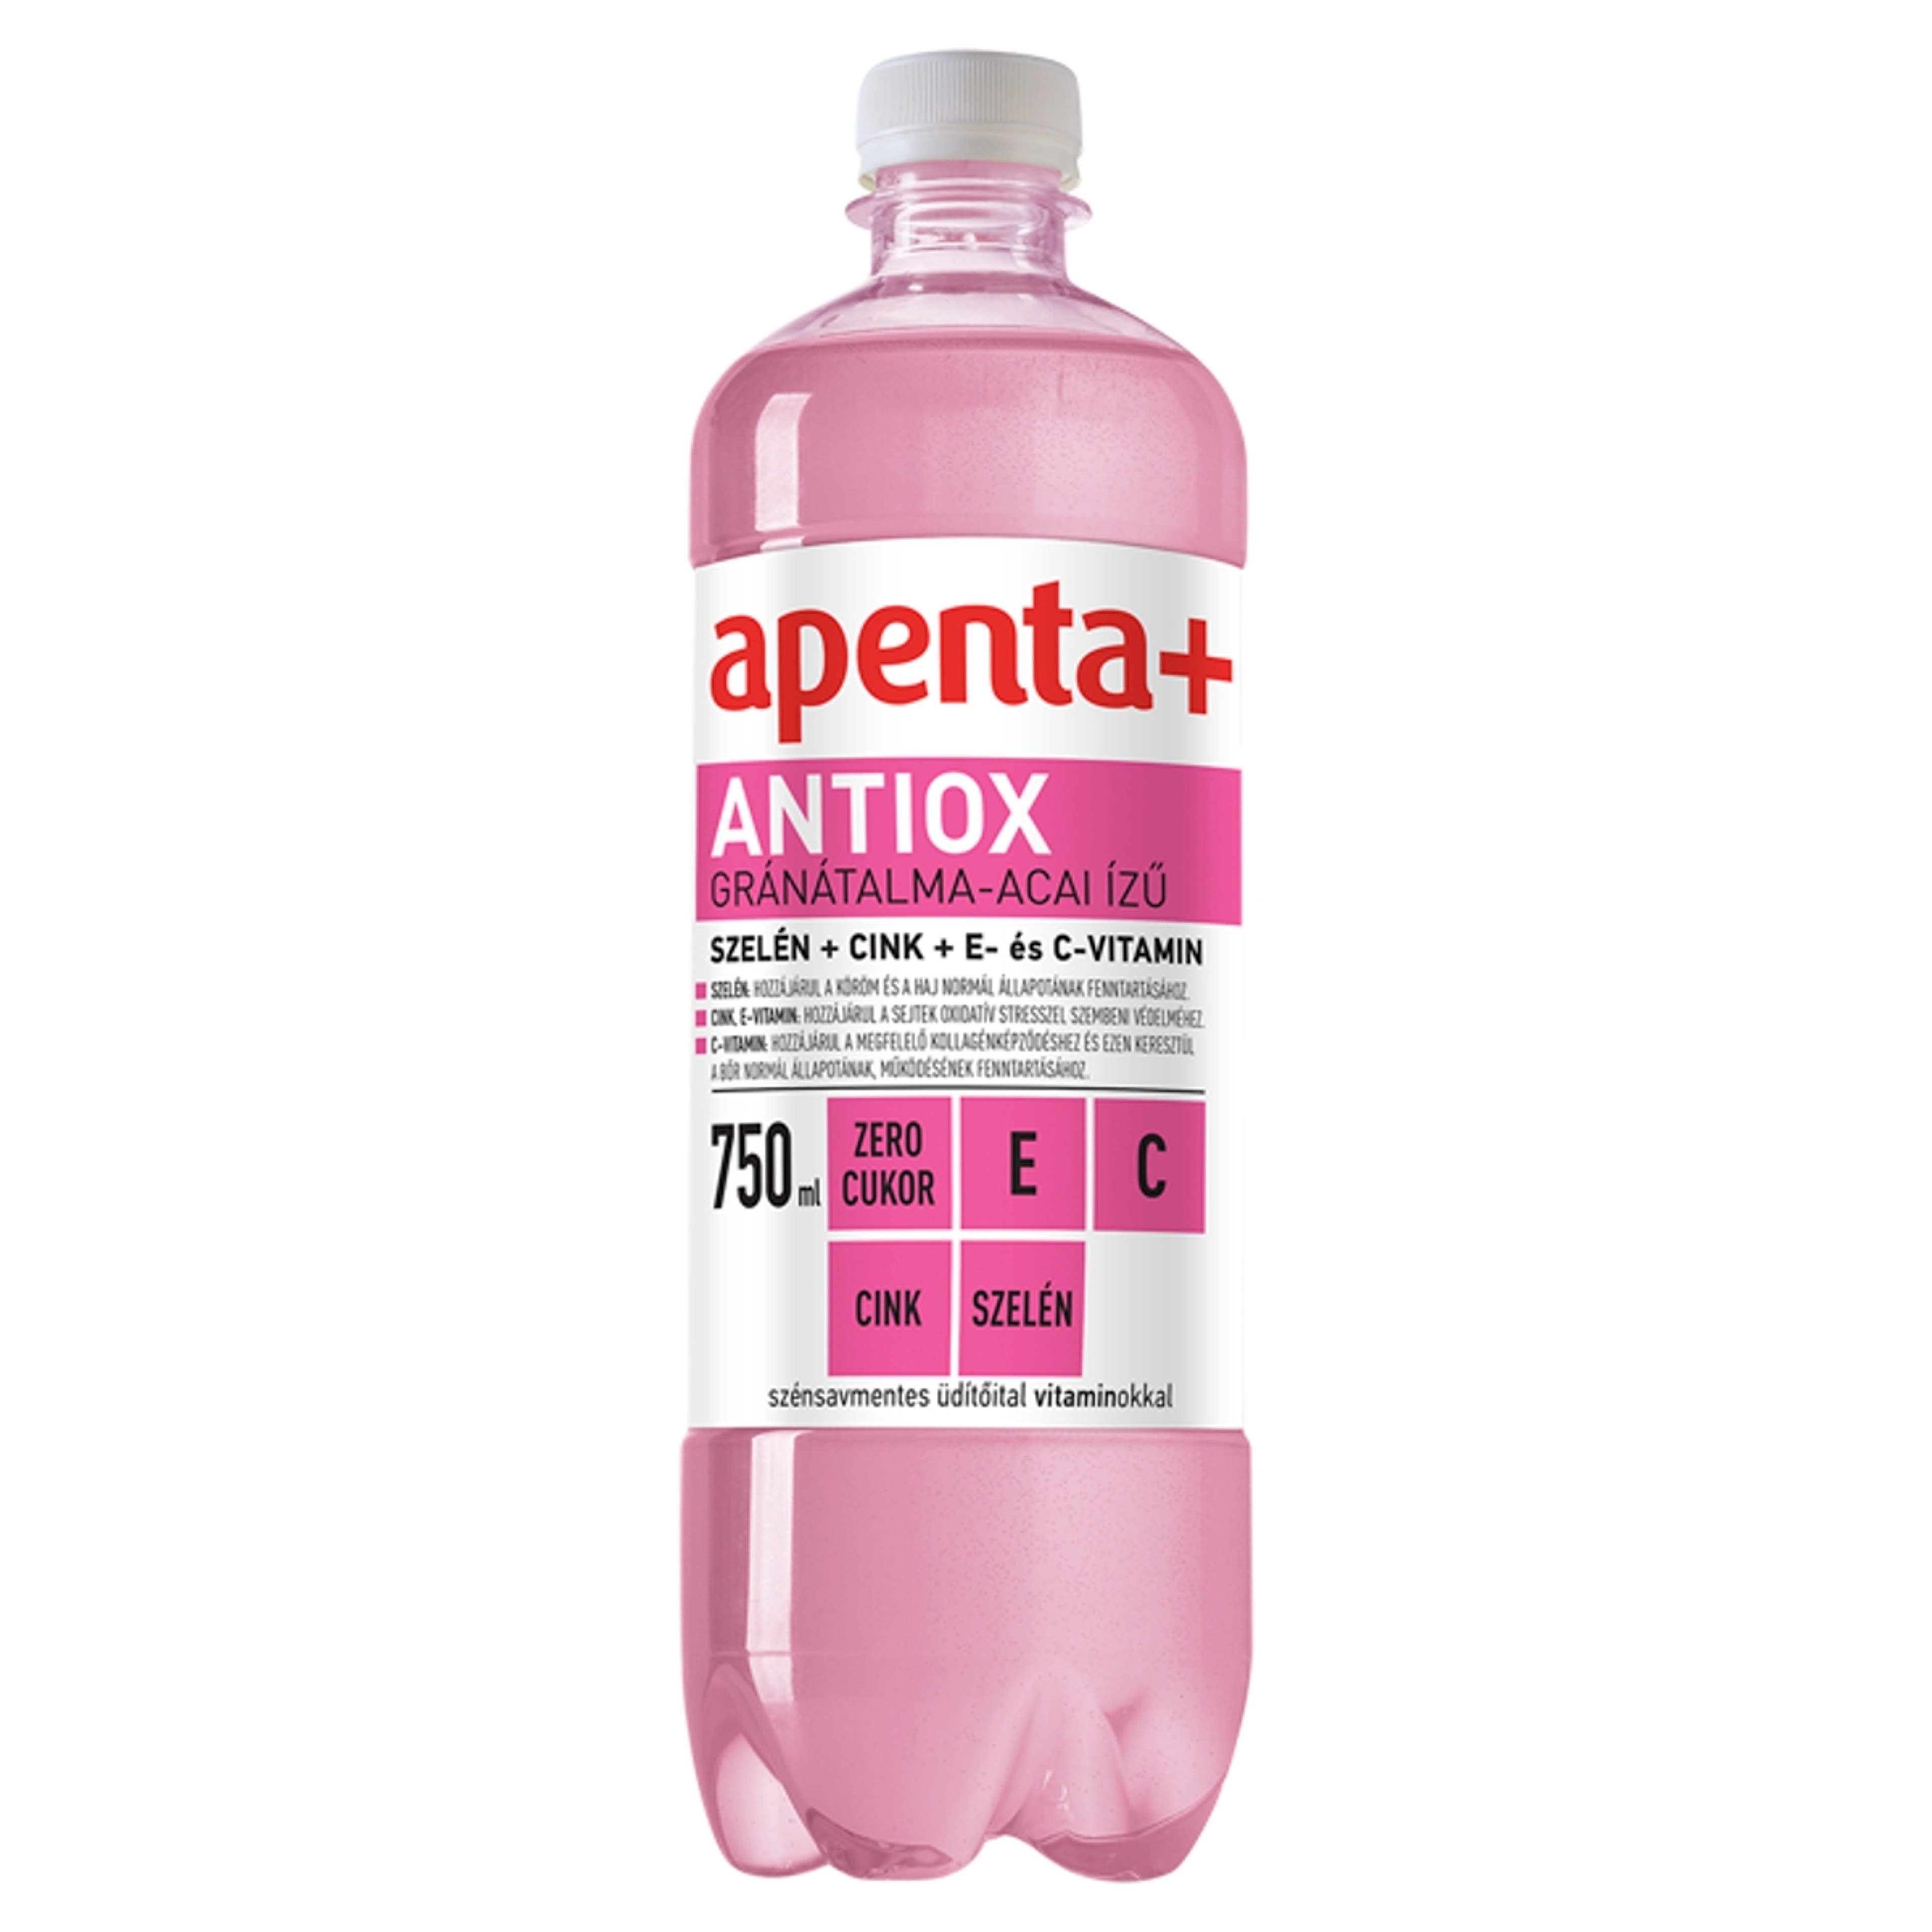 Apenta + antioxidáns - 750 ml